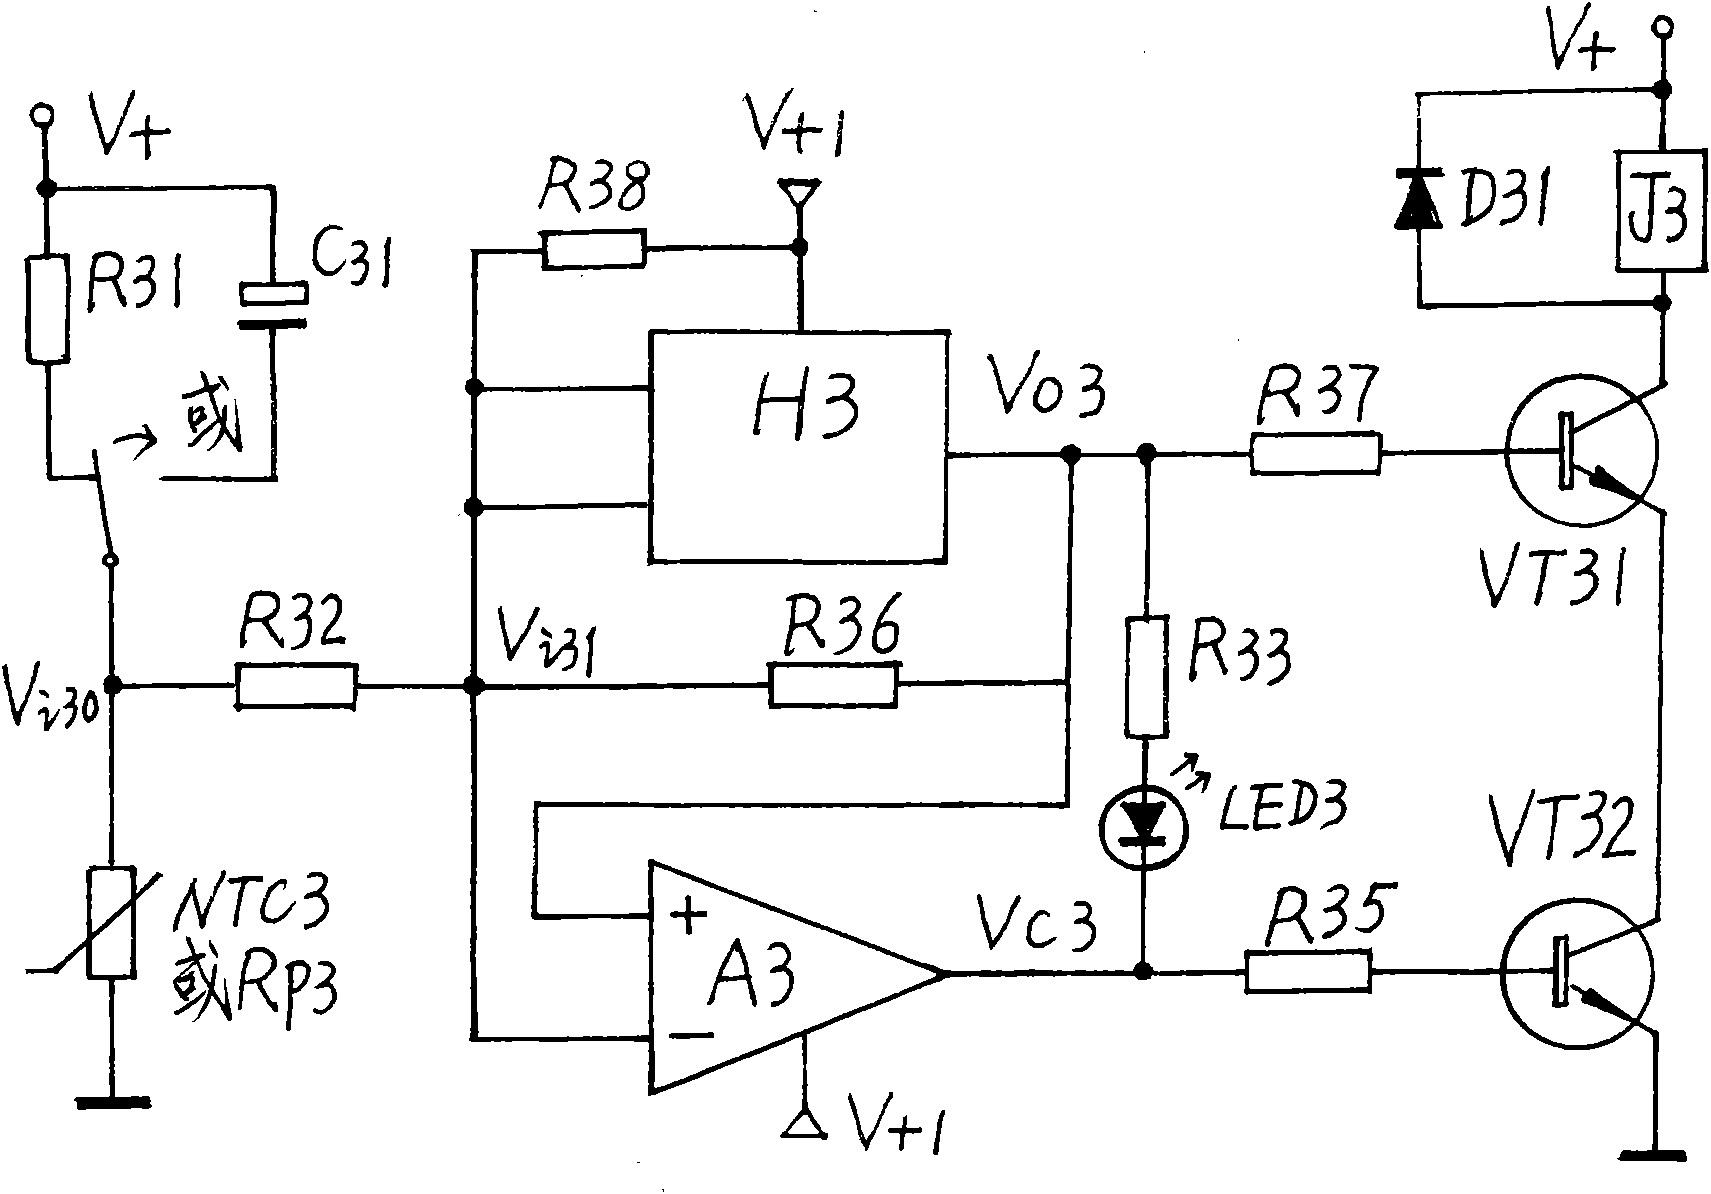 Safe control time-base circuit